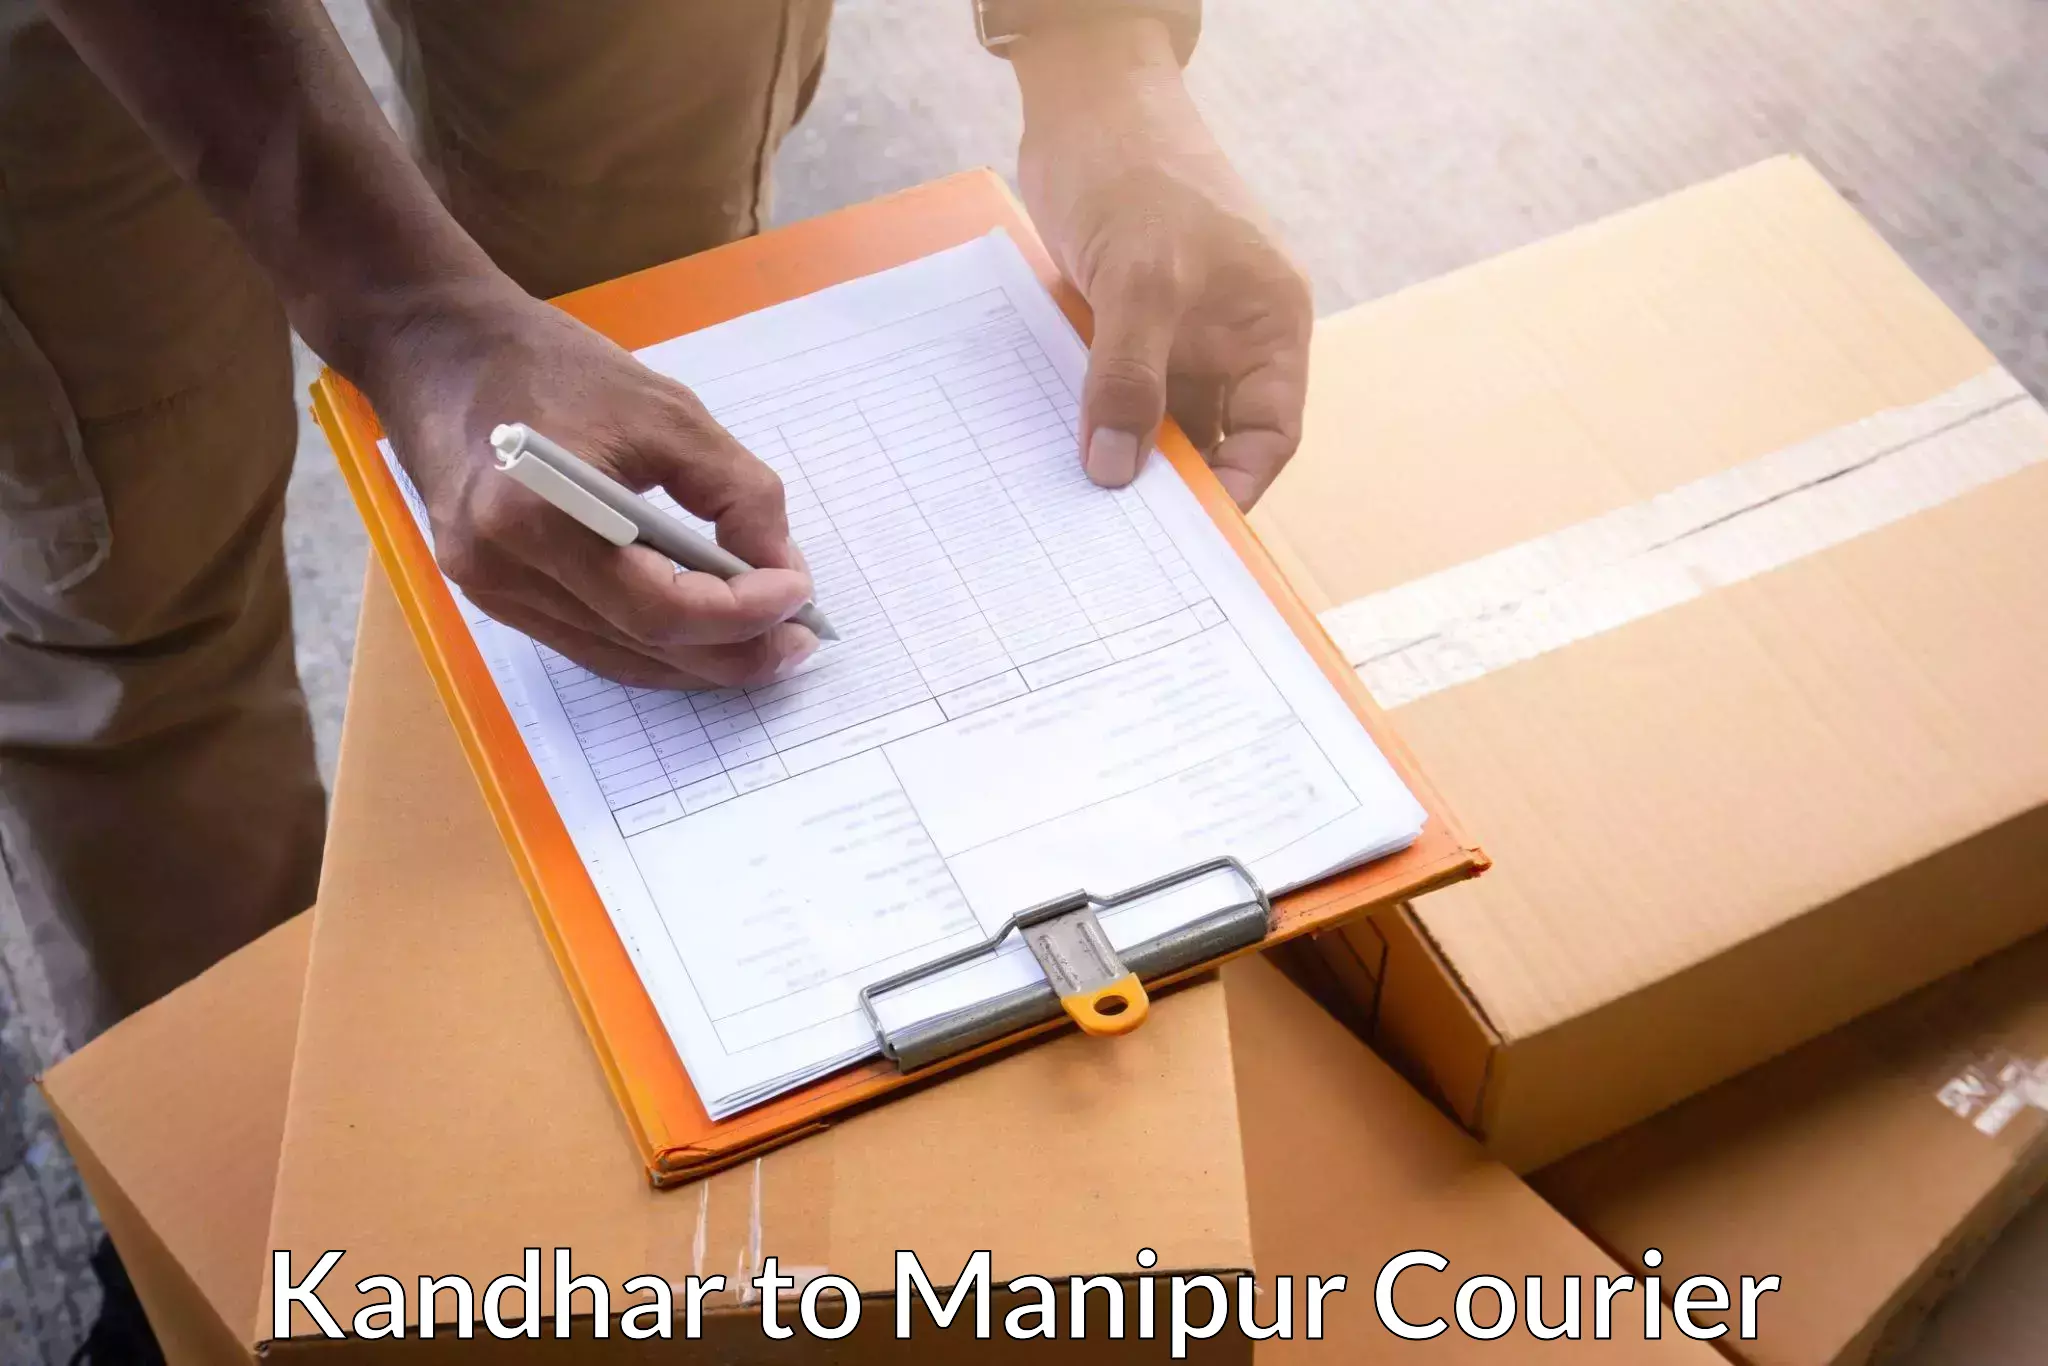 Efficient freight service in Kandhar to Manipur